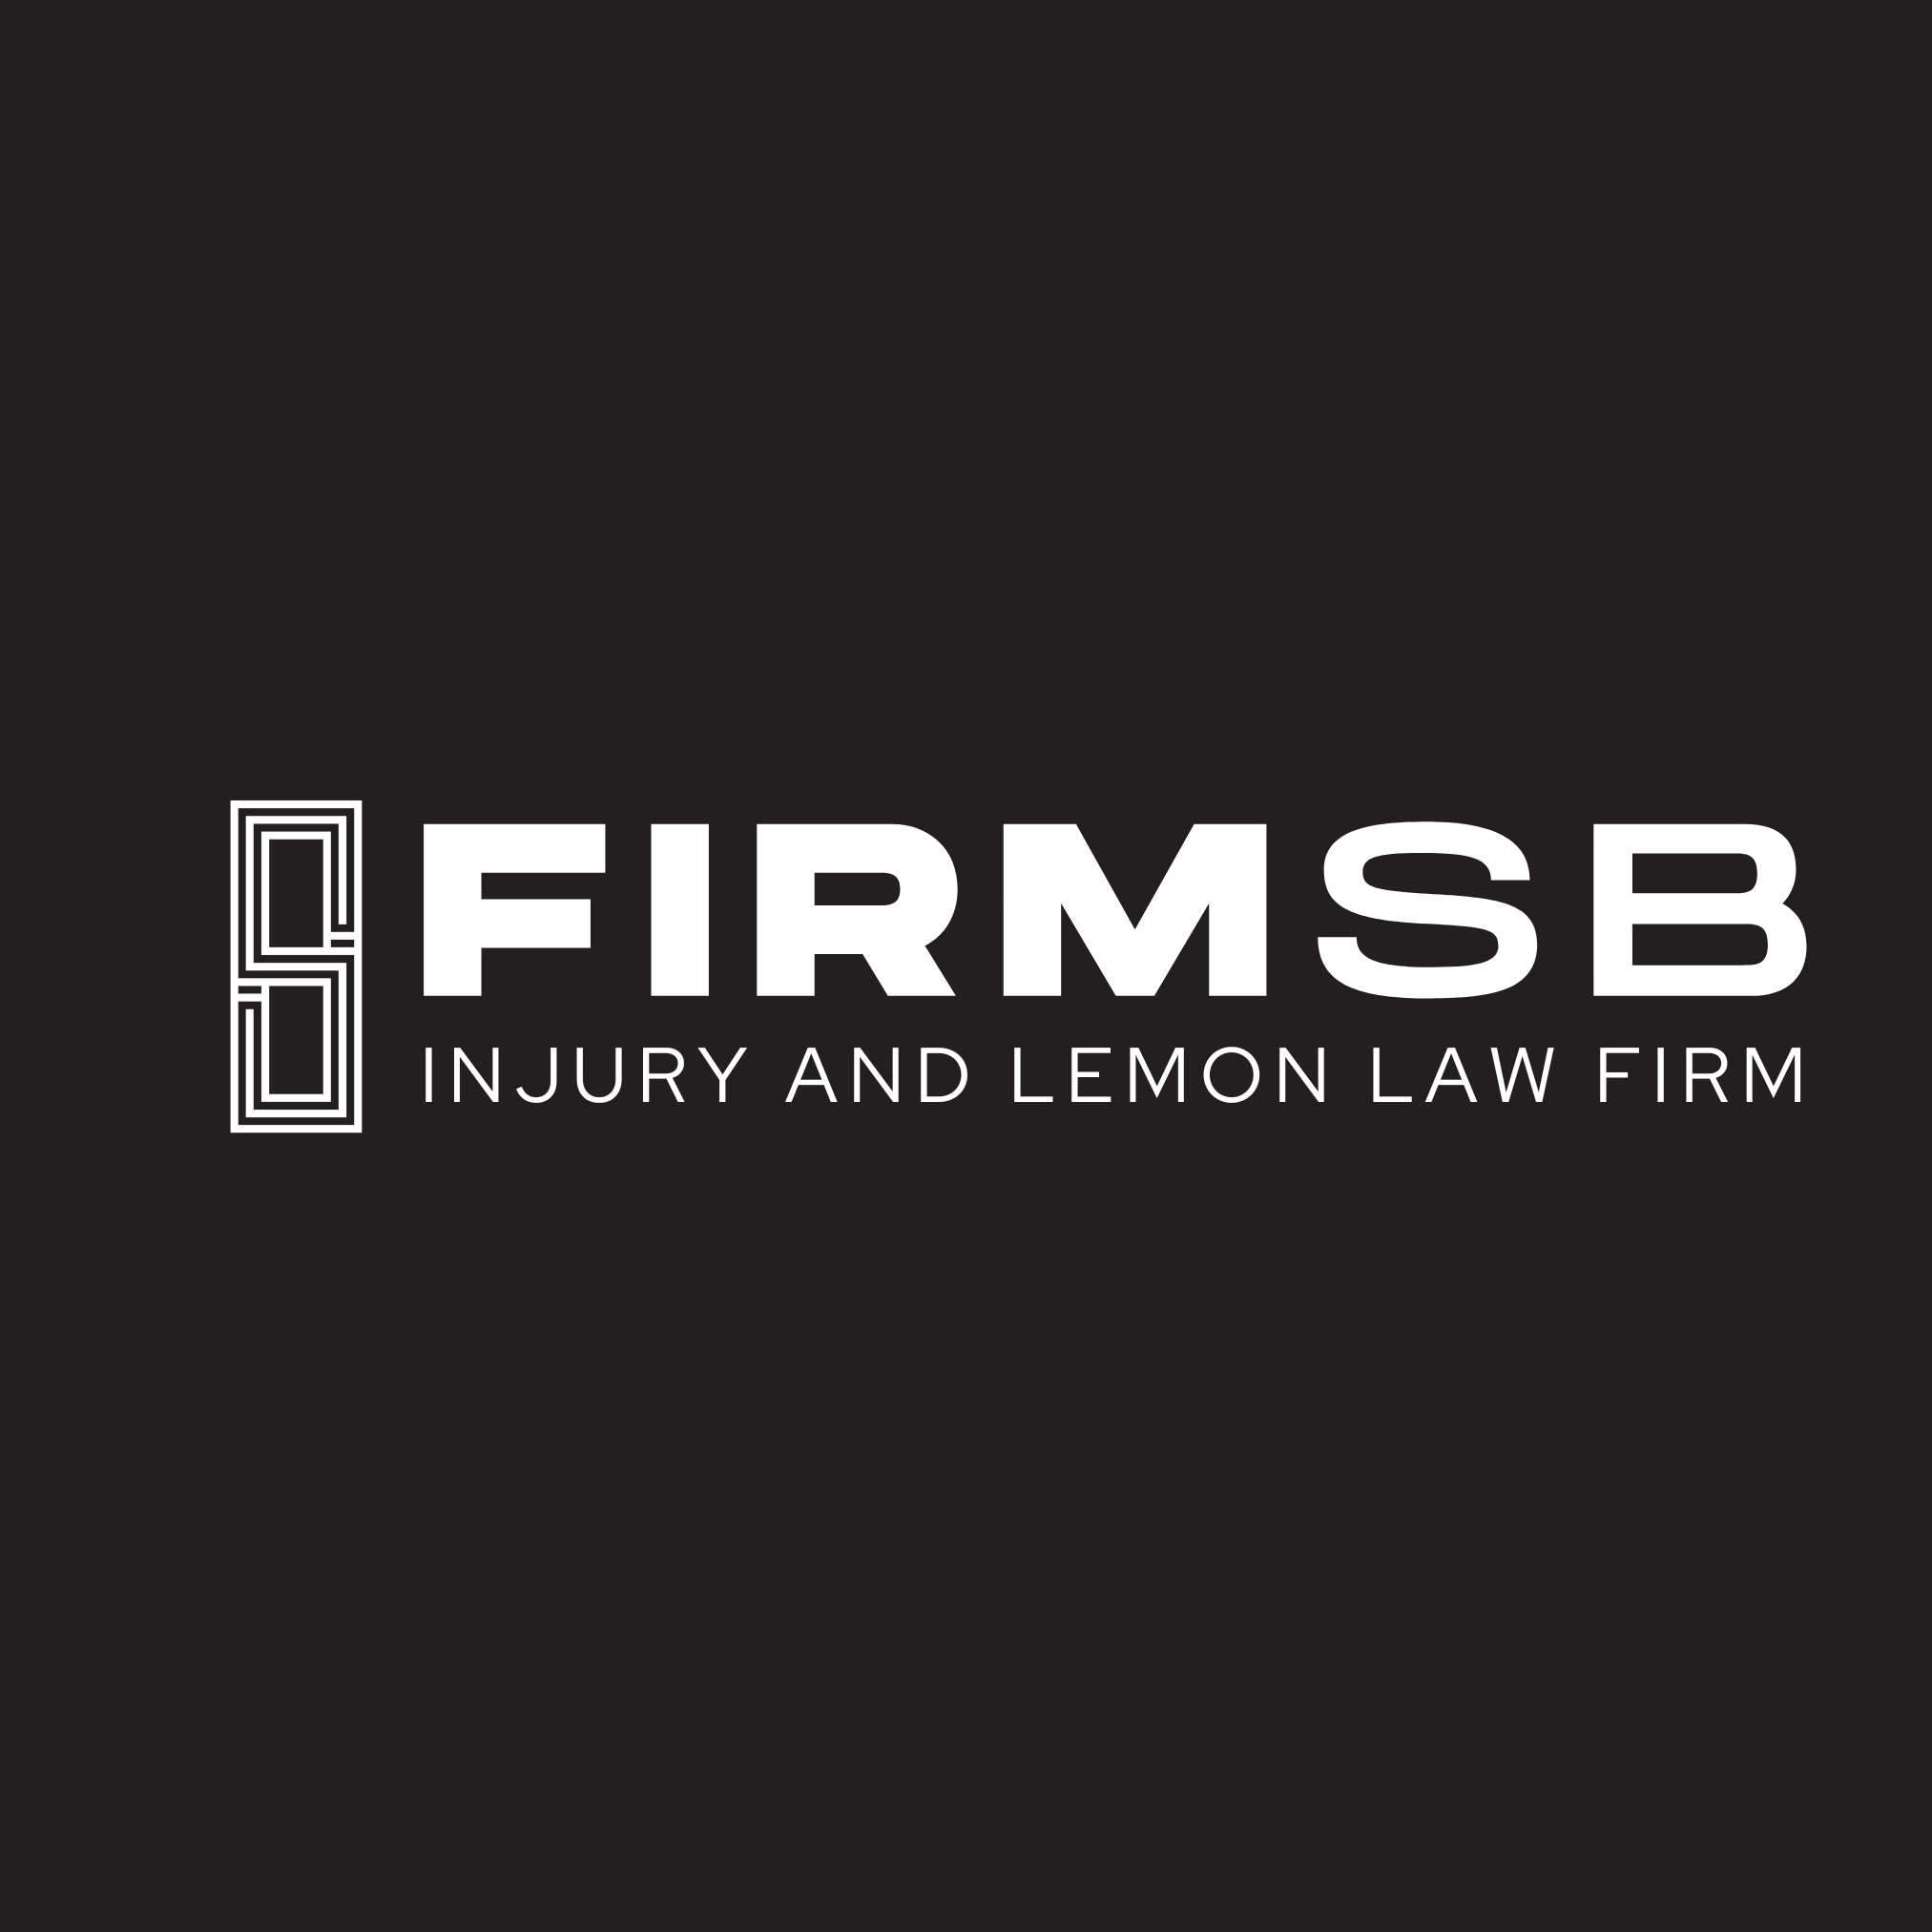 Firm SB Profile Picture